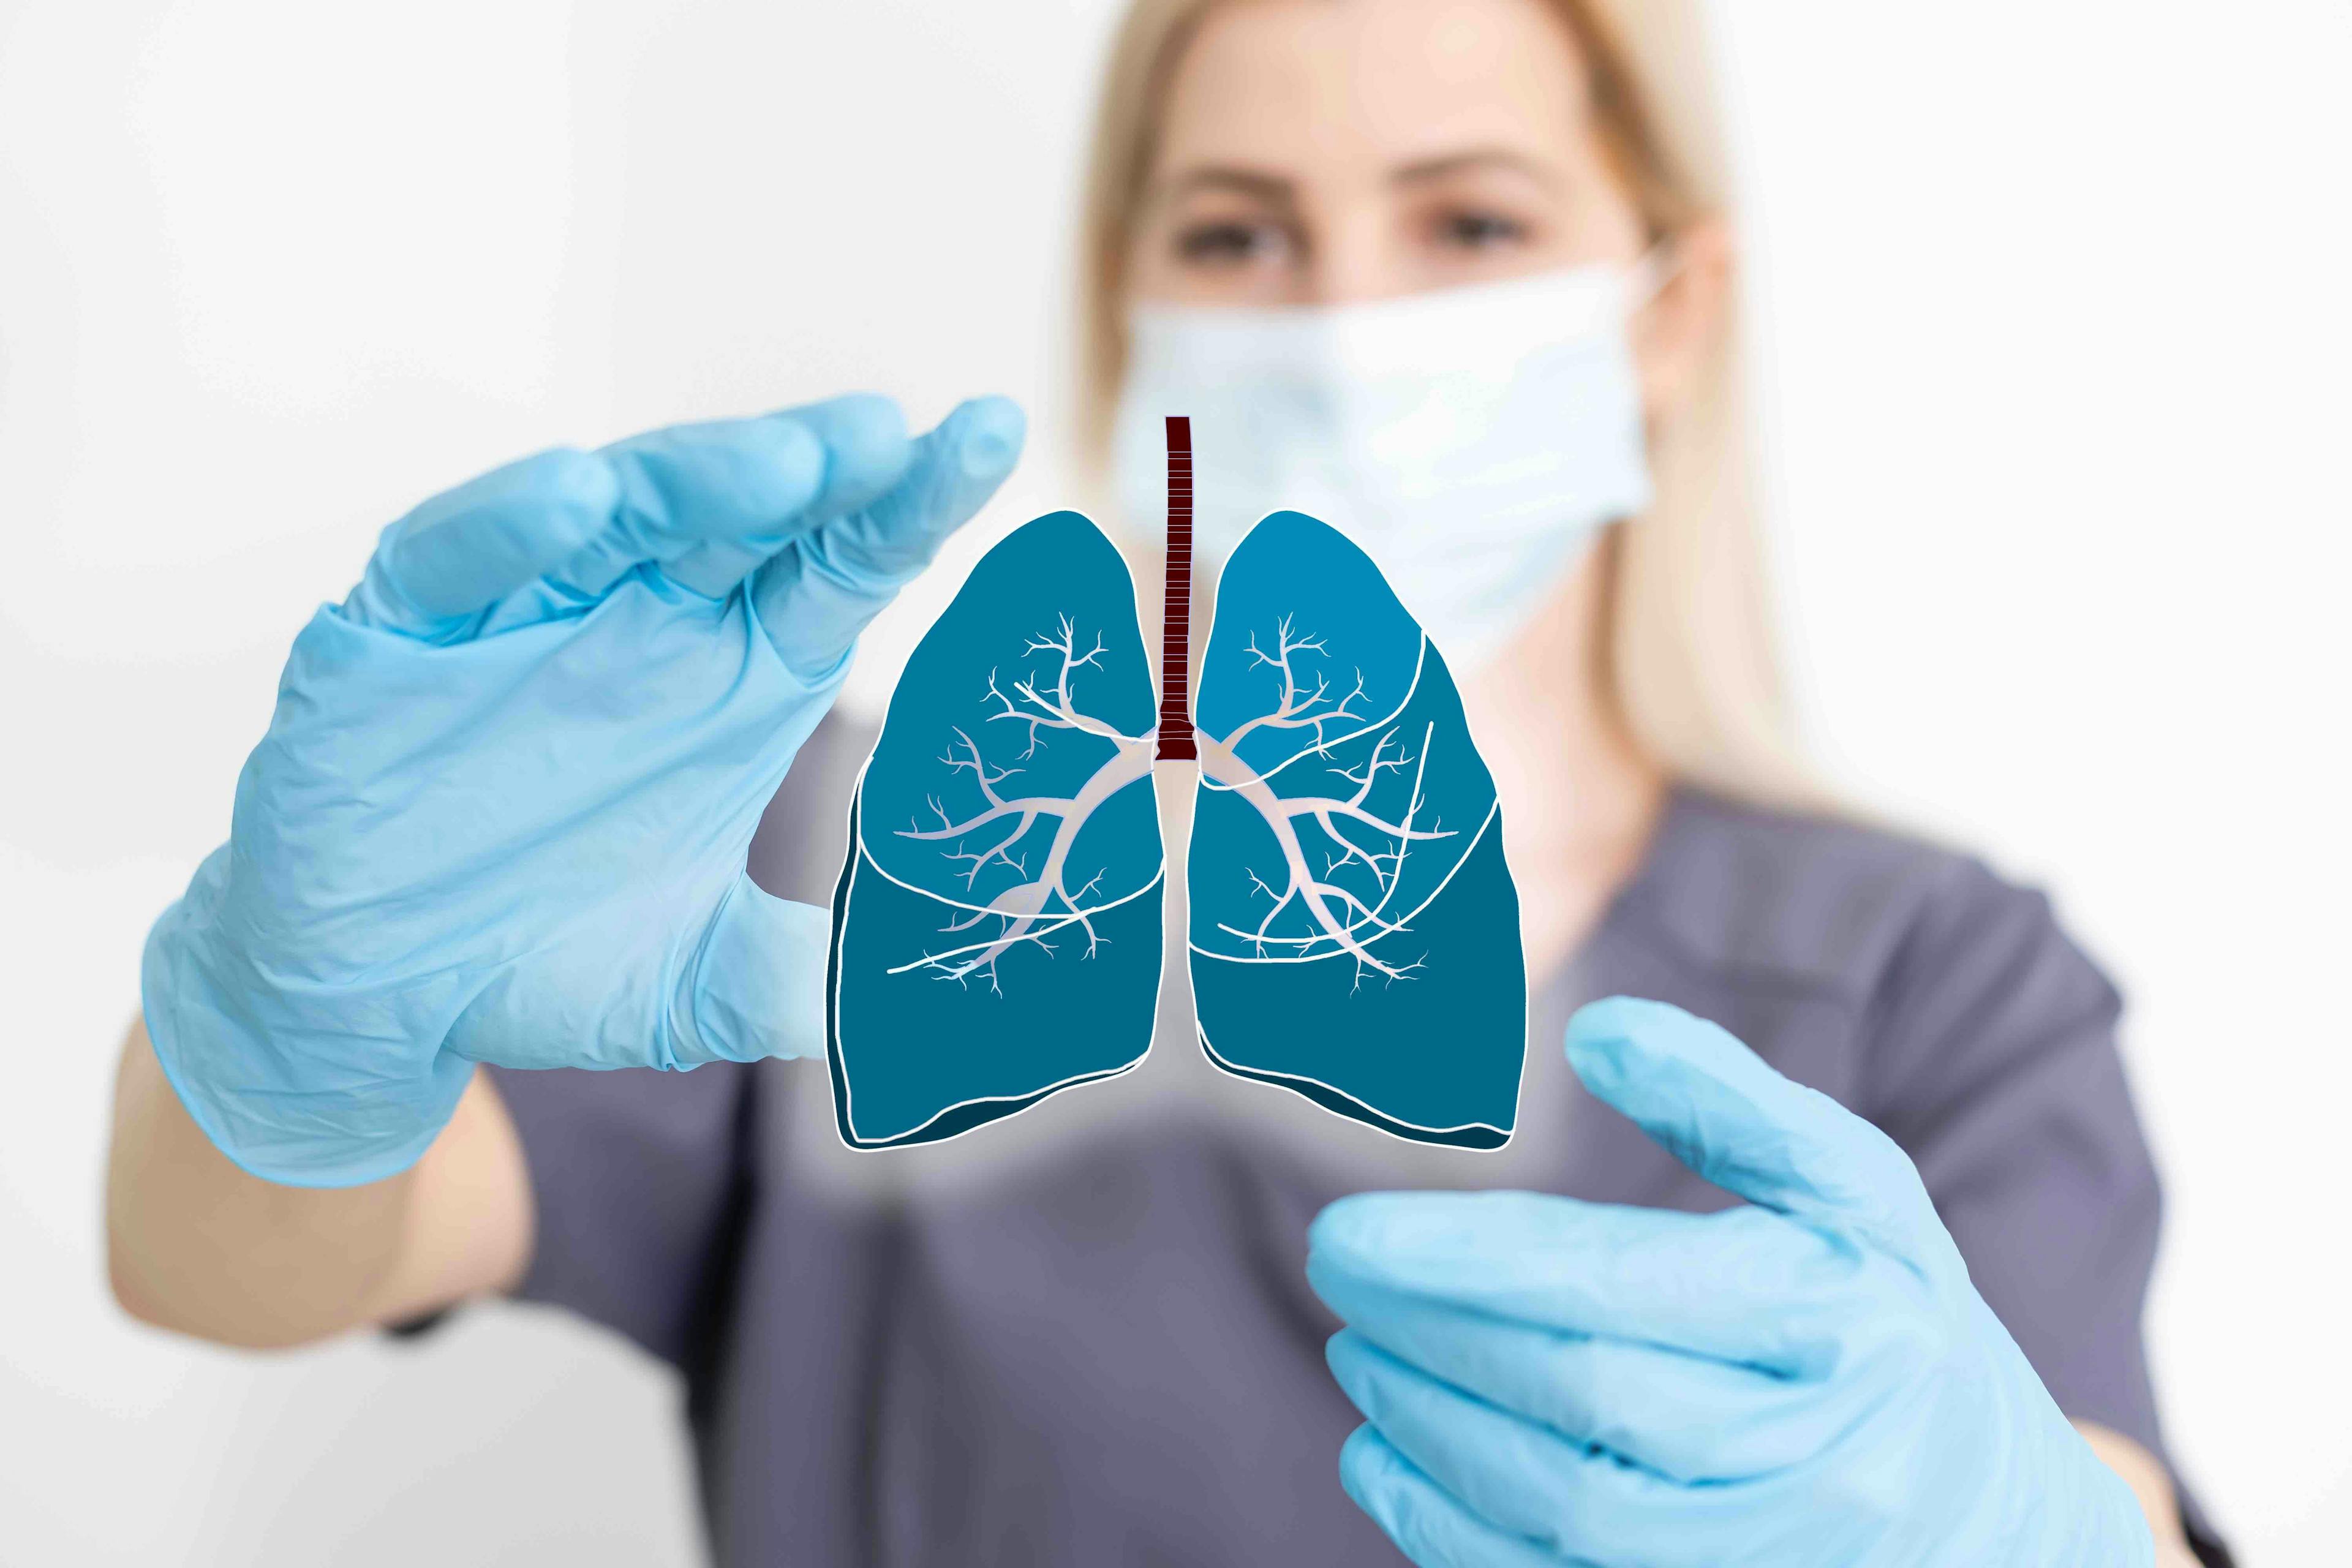 Lungs illustration | Image credit: Angelov - stock.adobe.com